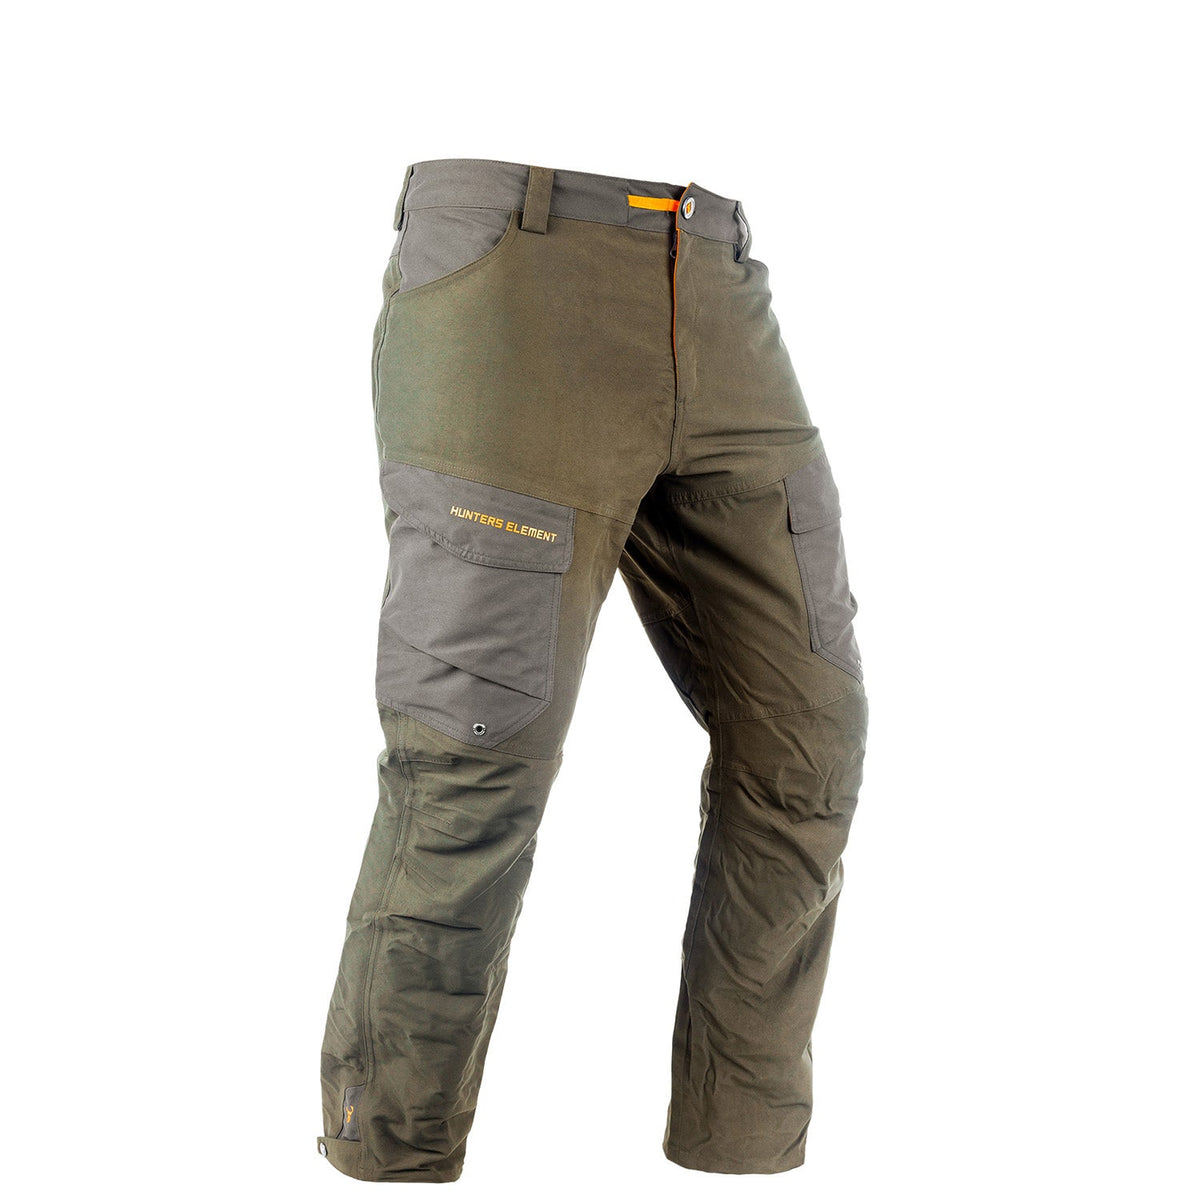 Hunters Element, Downpour Elite Trouser, All-Purpose Hunting Pants, Seam-Sealed